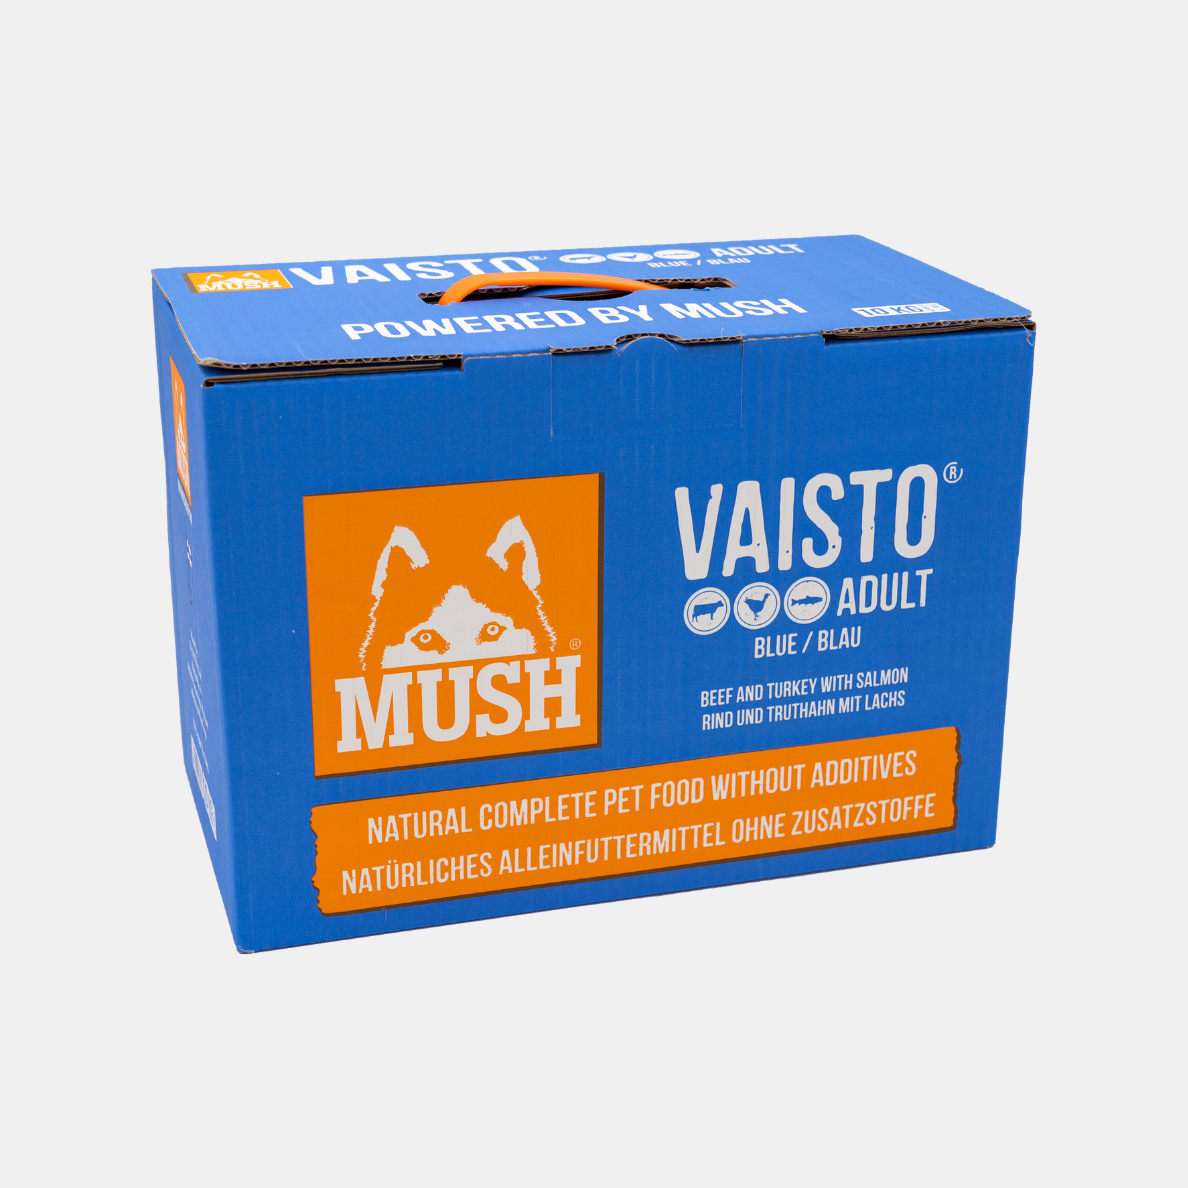 MUSH Vaisto® Bœuf-Dinde-Saumon ADULTE Bleu